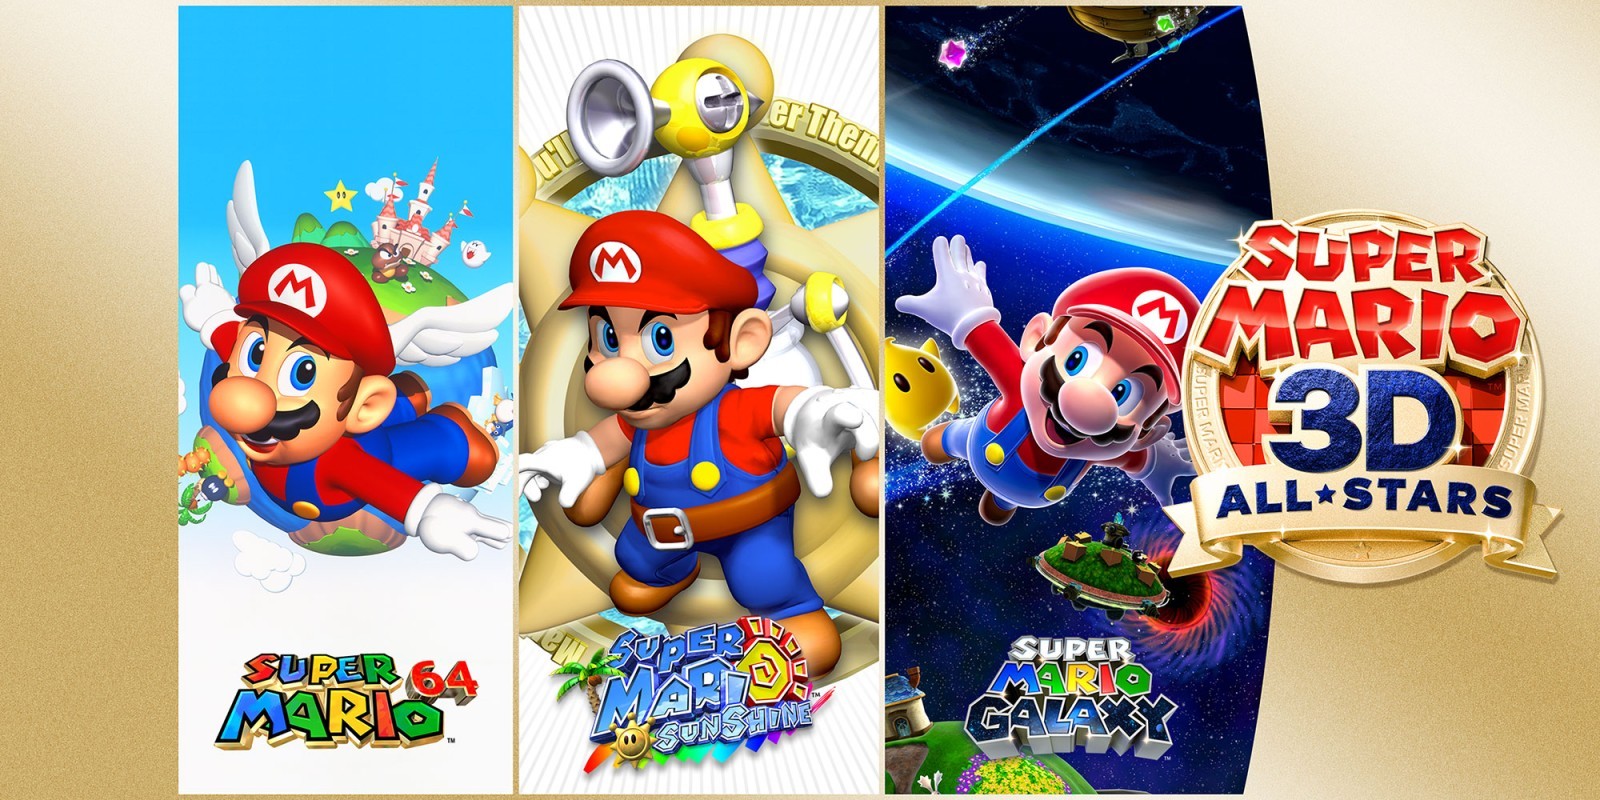 Como a trilha de 'Mario' virou marco cultural além dos games e